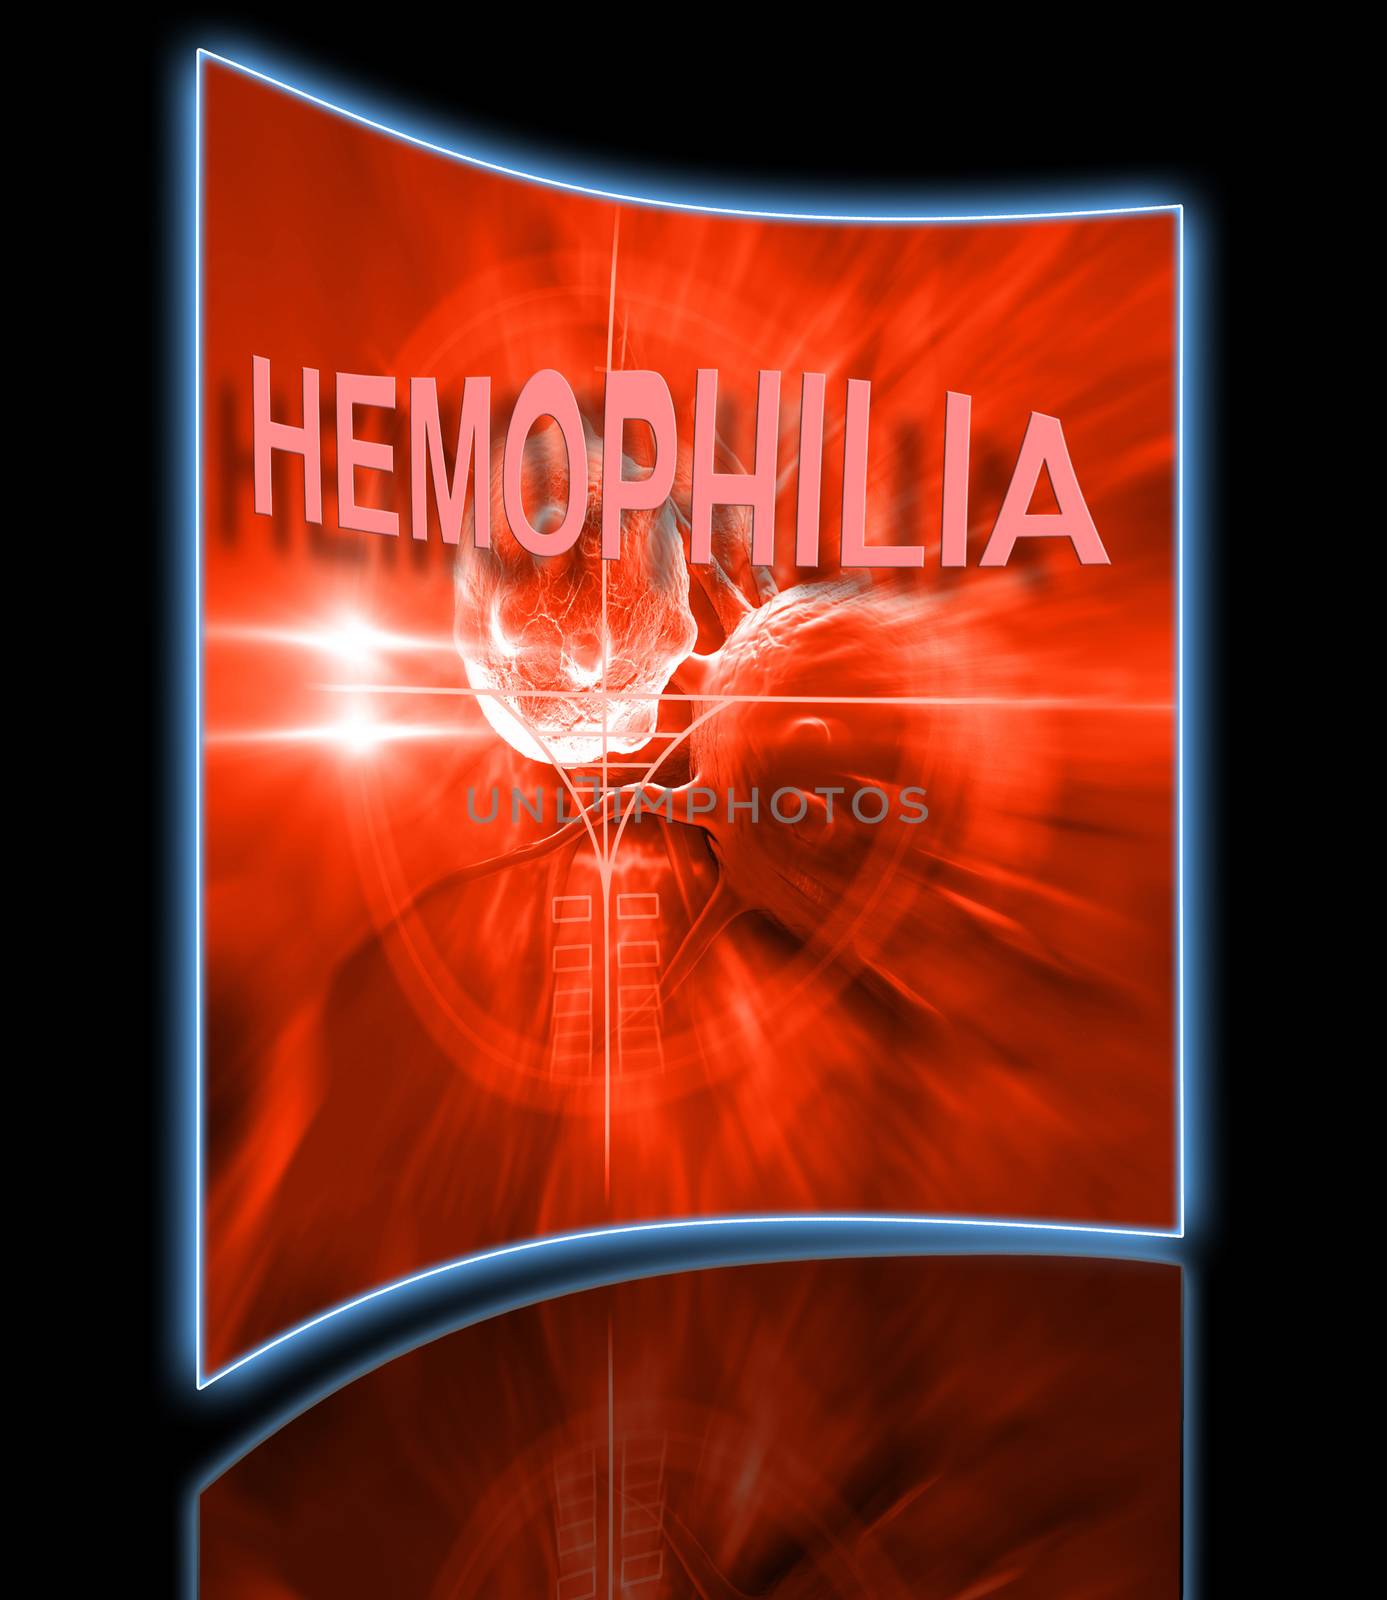 hemophilia by vitanovski